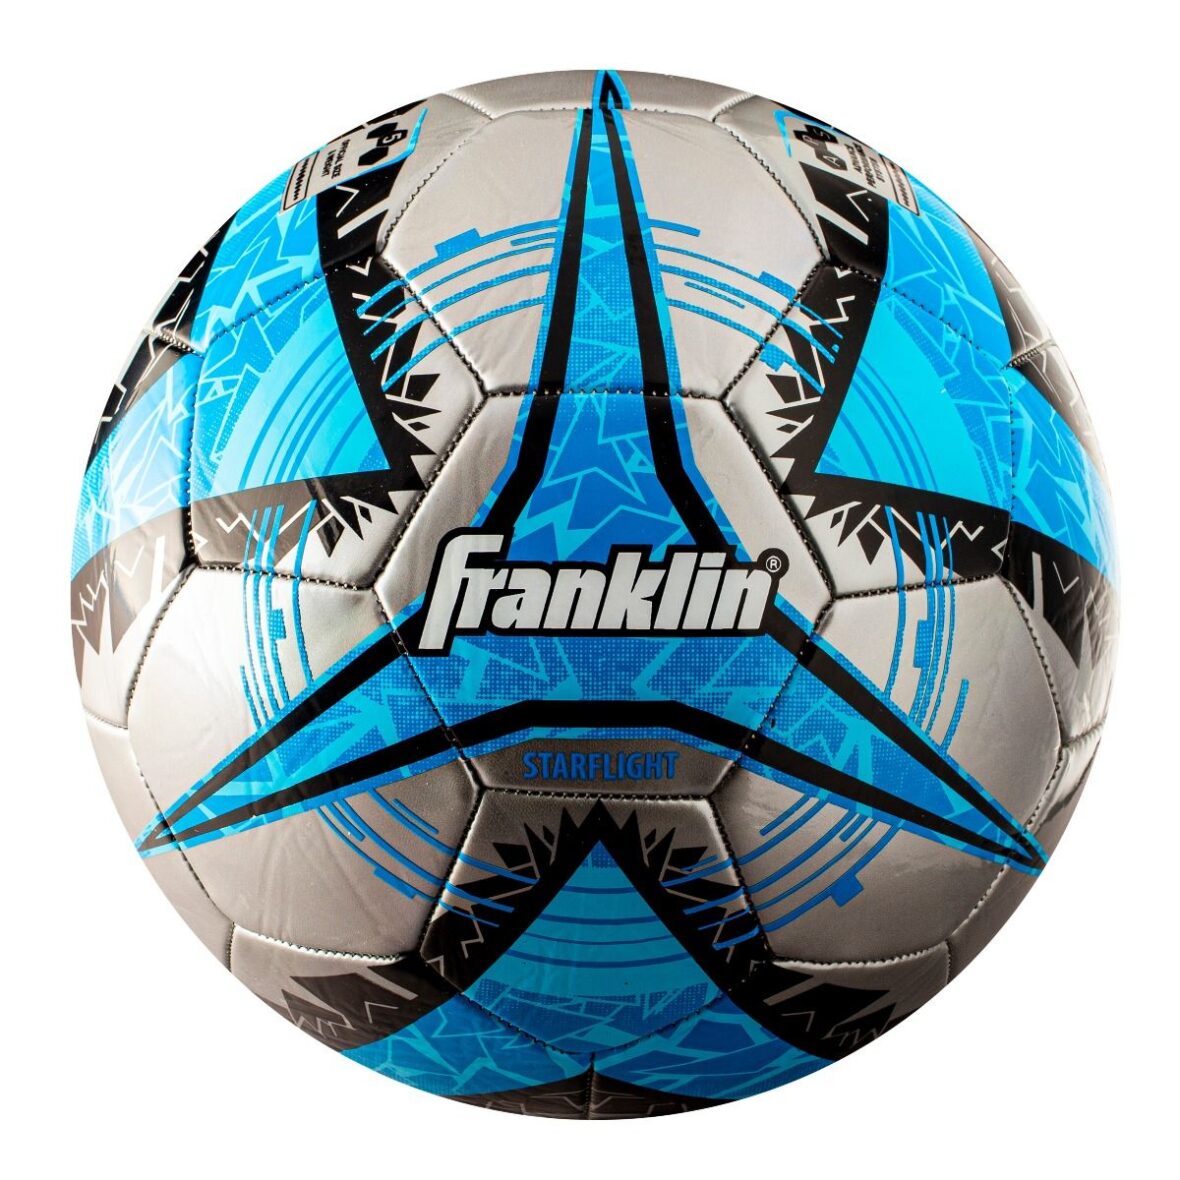 Franklin Starflight Soccer ball blue silver- size 5